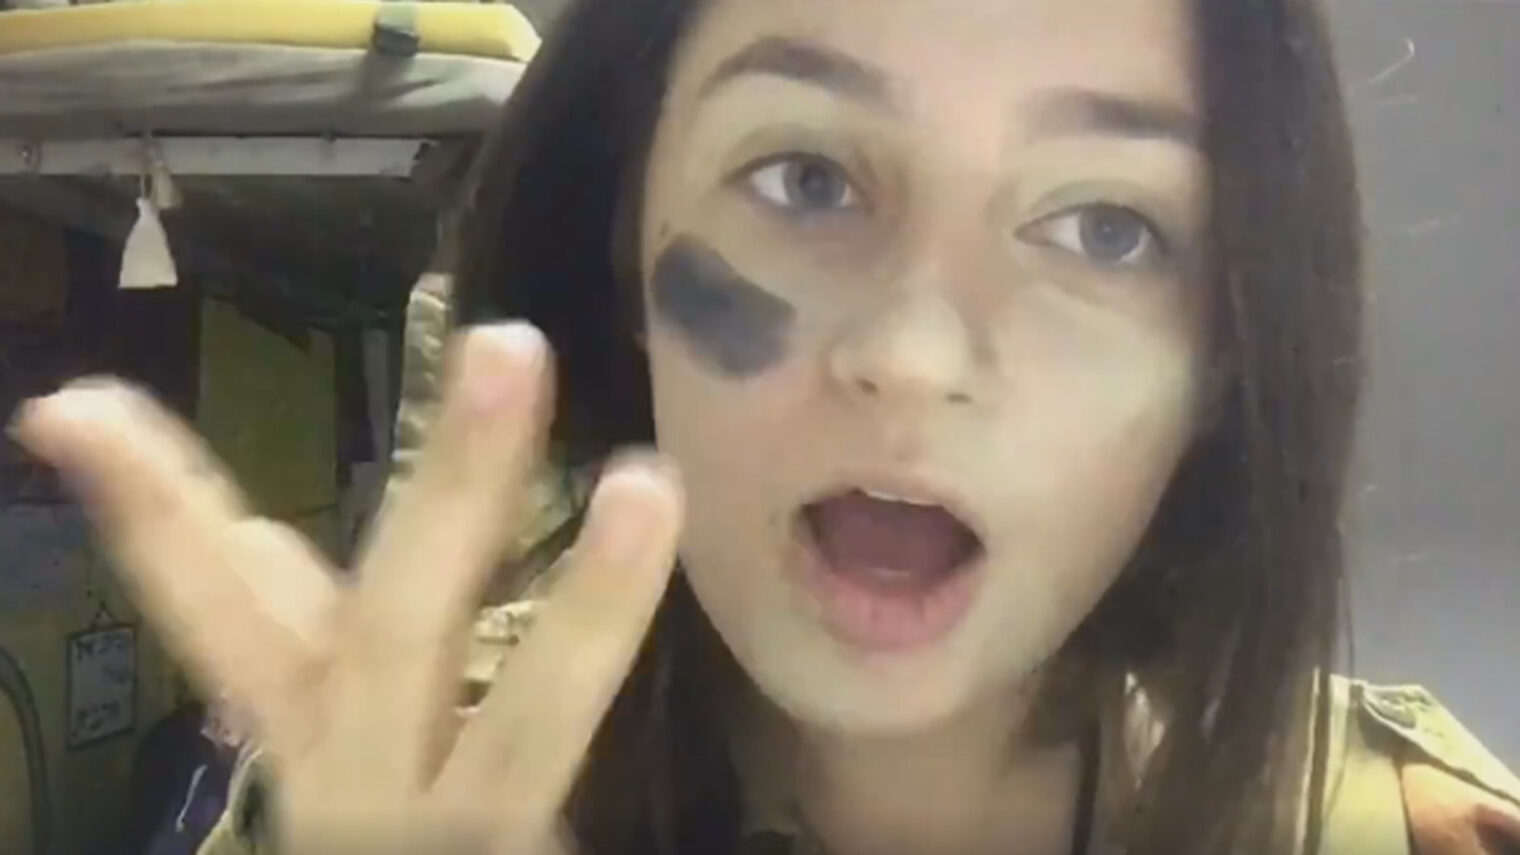 Makeup tutorial parody has the world chuckling - ISRAEL21c